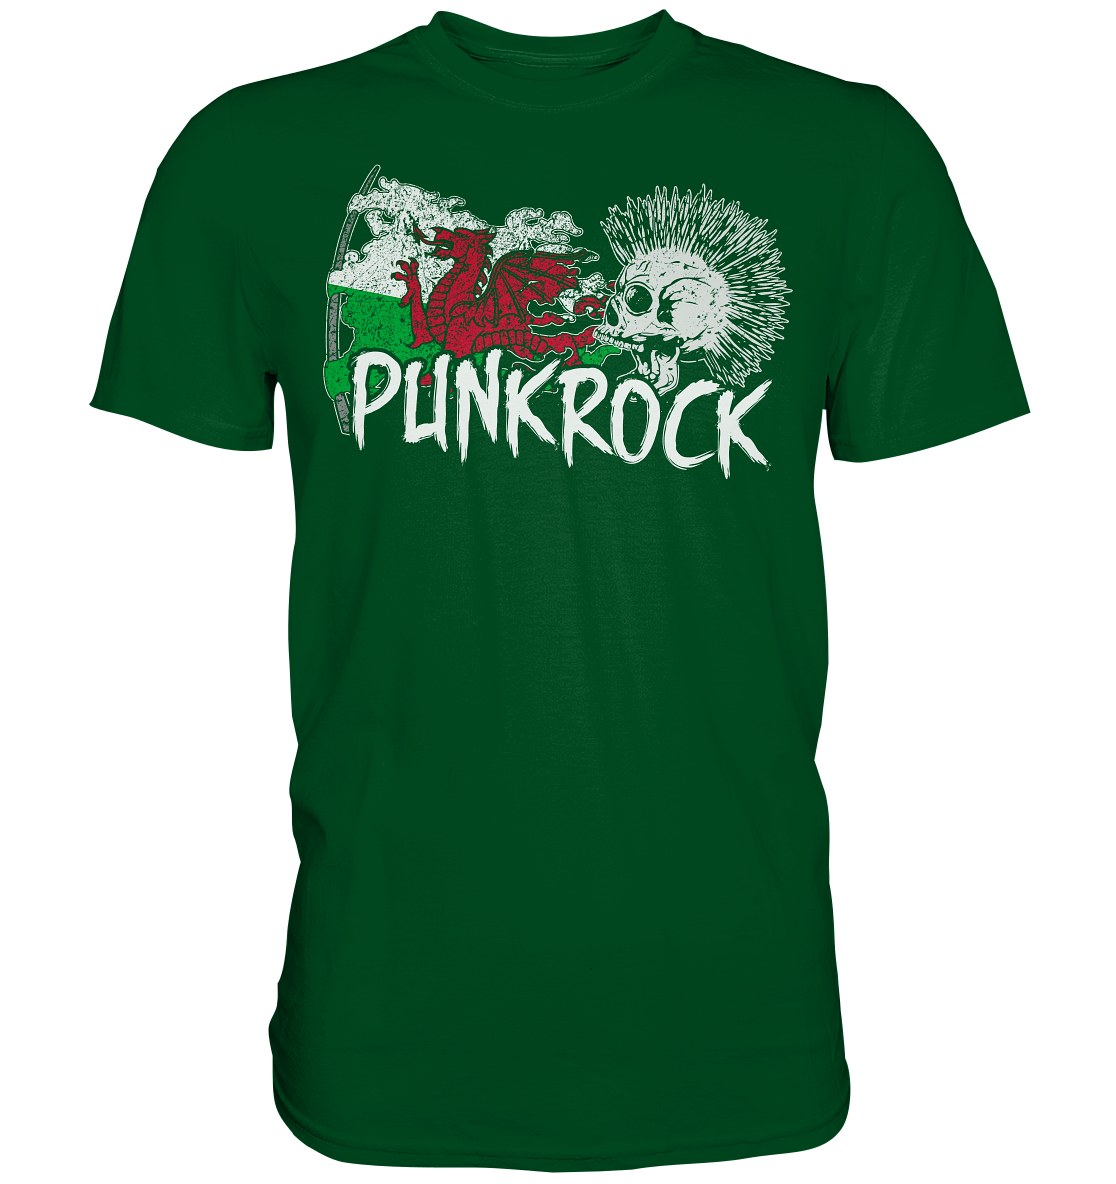 Punkrock "Wales" - Premium Shirt